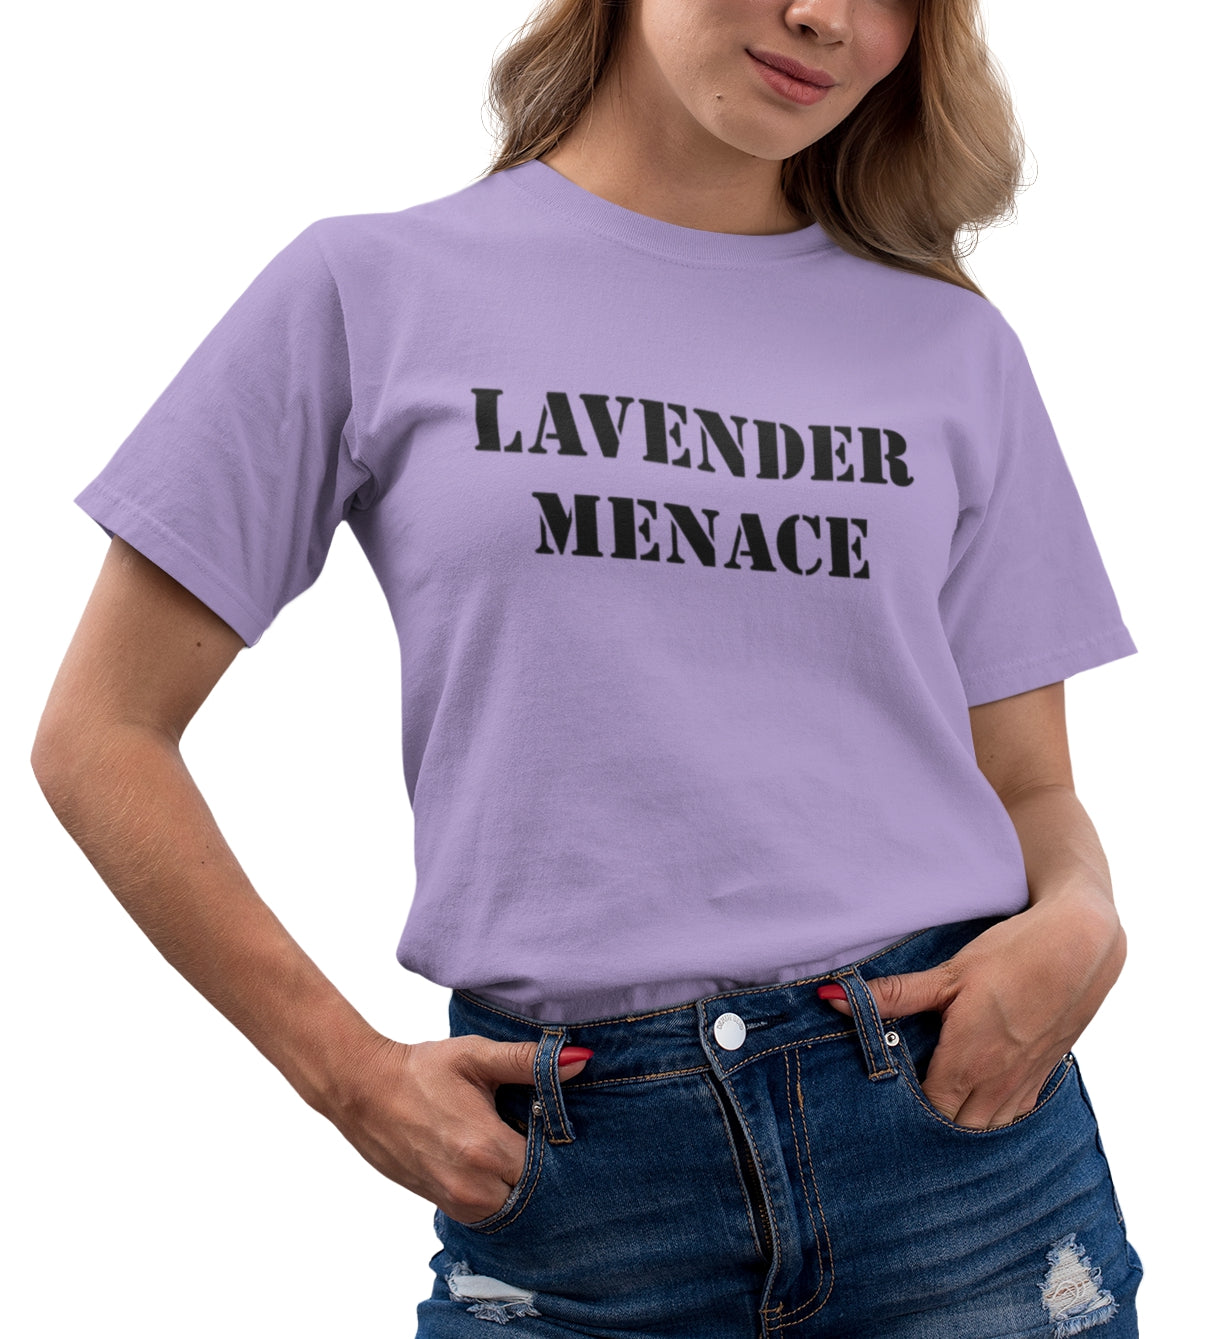 LAVENDER MENACE on Adult T-Shirt (#1220-1)